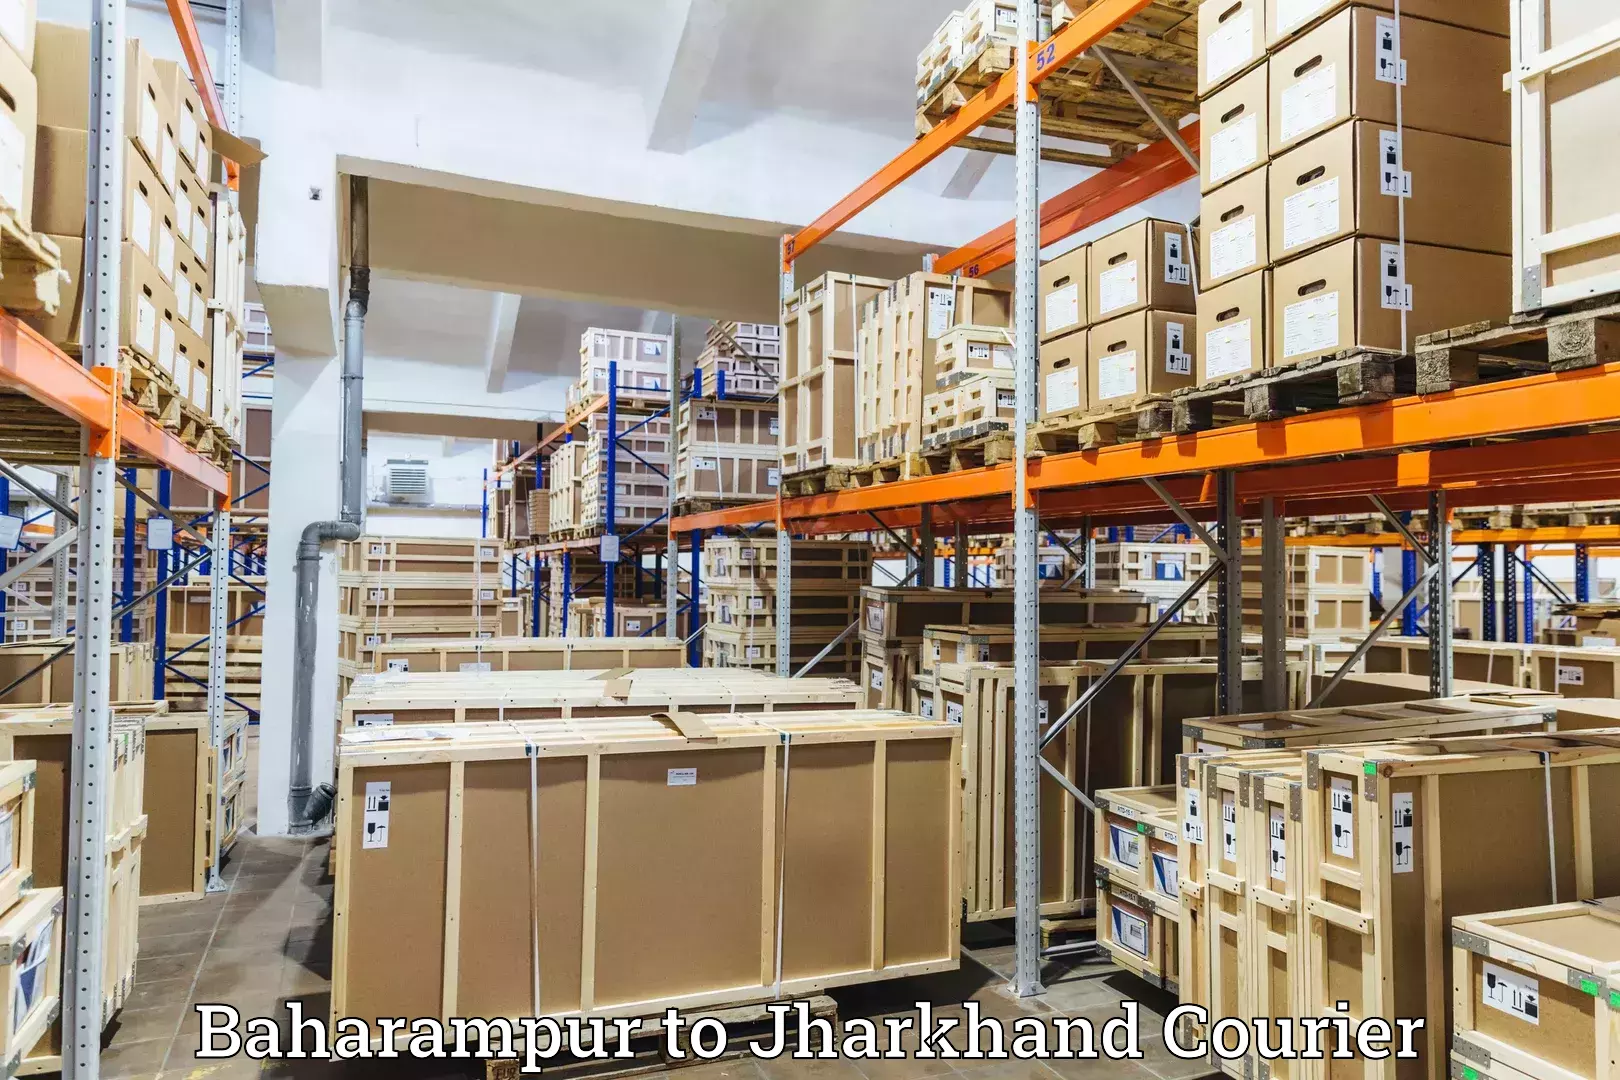 Customizable delivery plans Baharampur to Medininagar